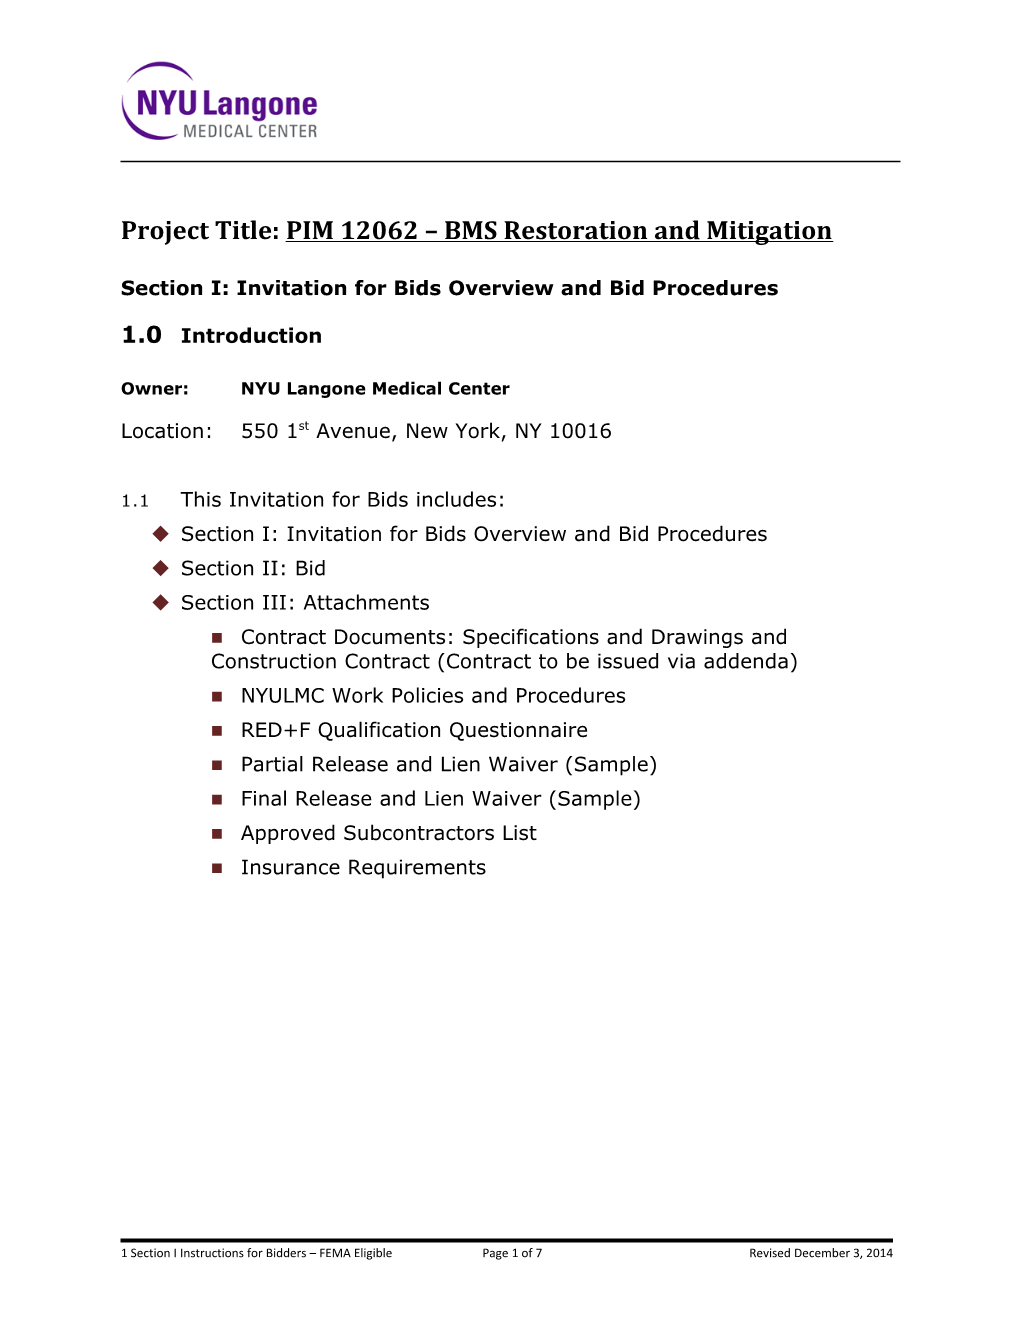 Project Title: PIM 12062 BMS Restoration and Mitigation